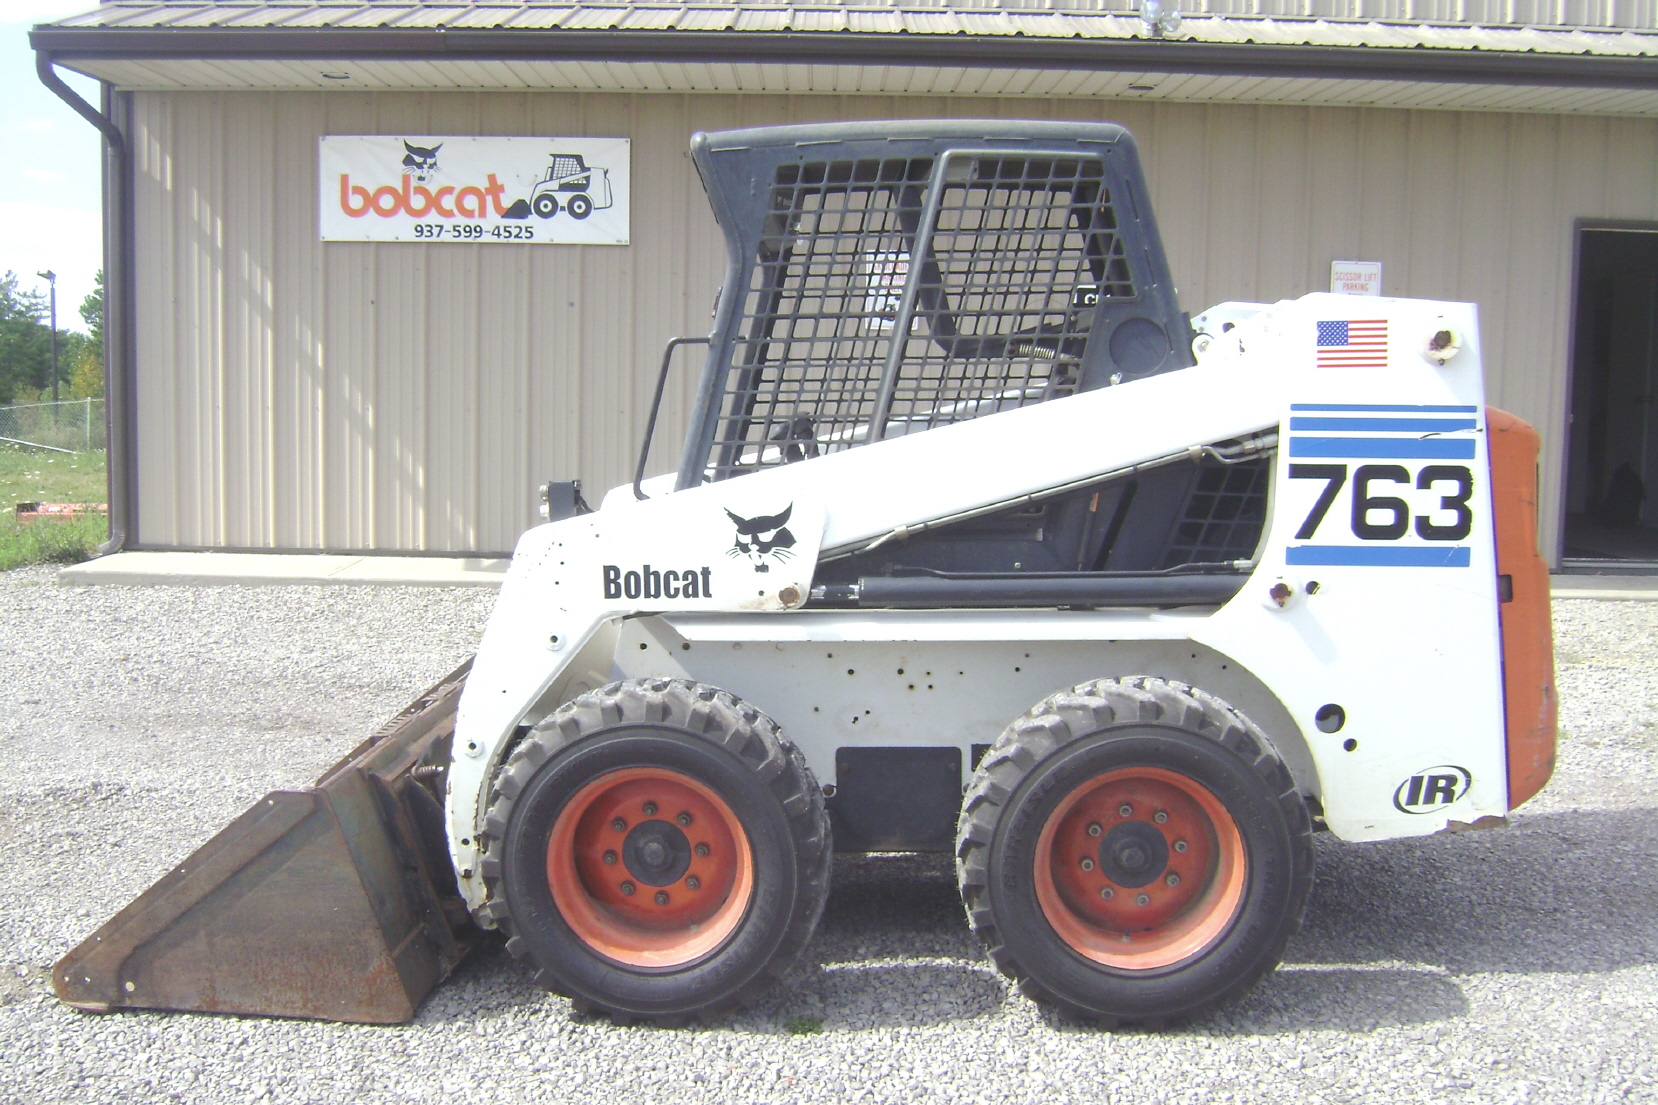 Bobcat купить bobcat pro. Bobcat s680. Bobcat 763. Bobcat модели 763. Бобкэт 175.